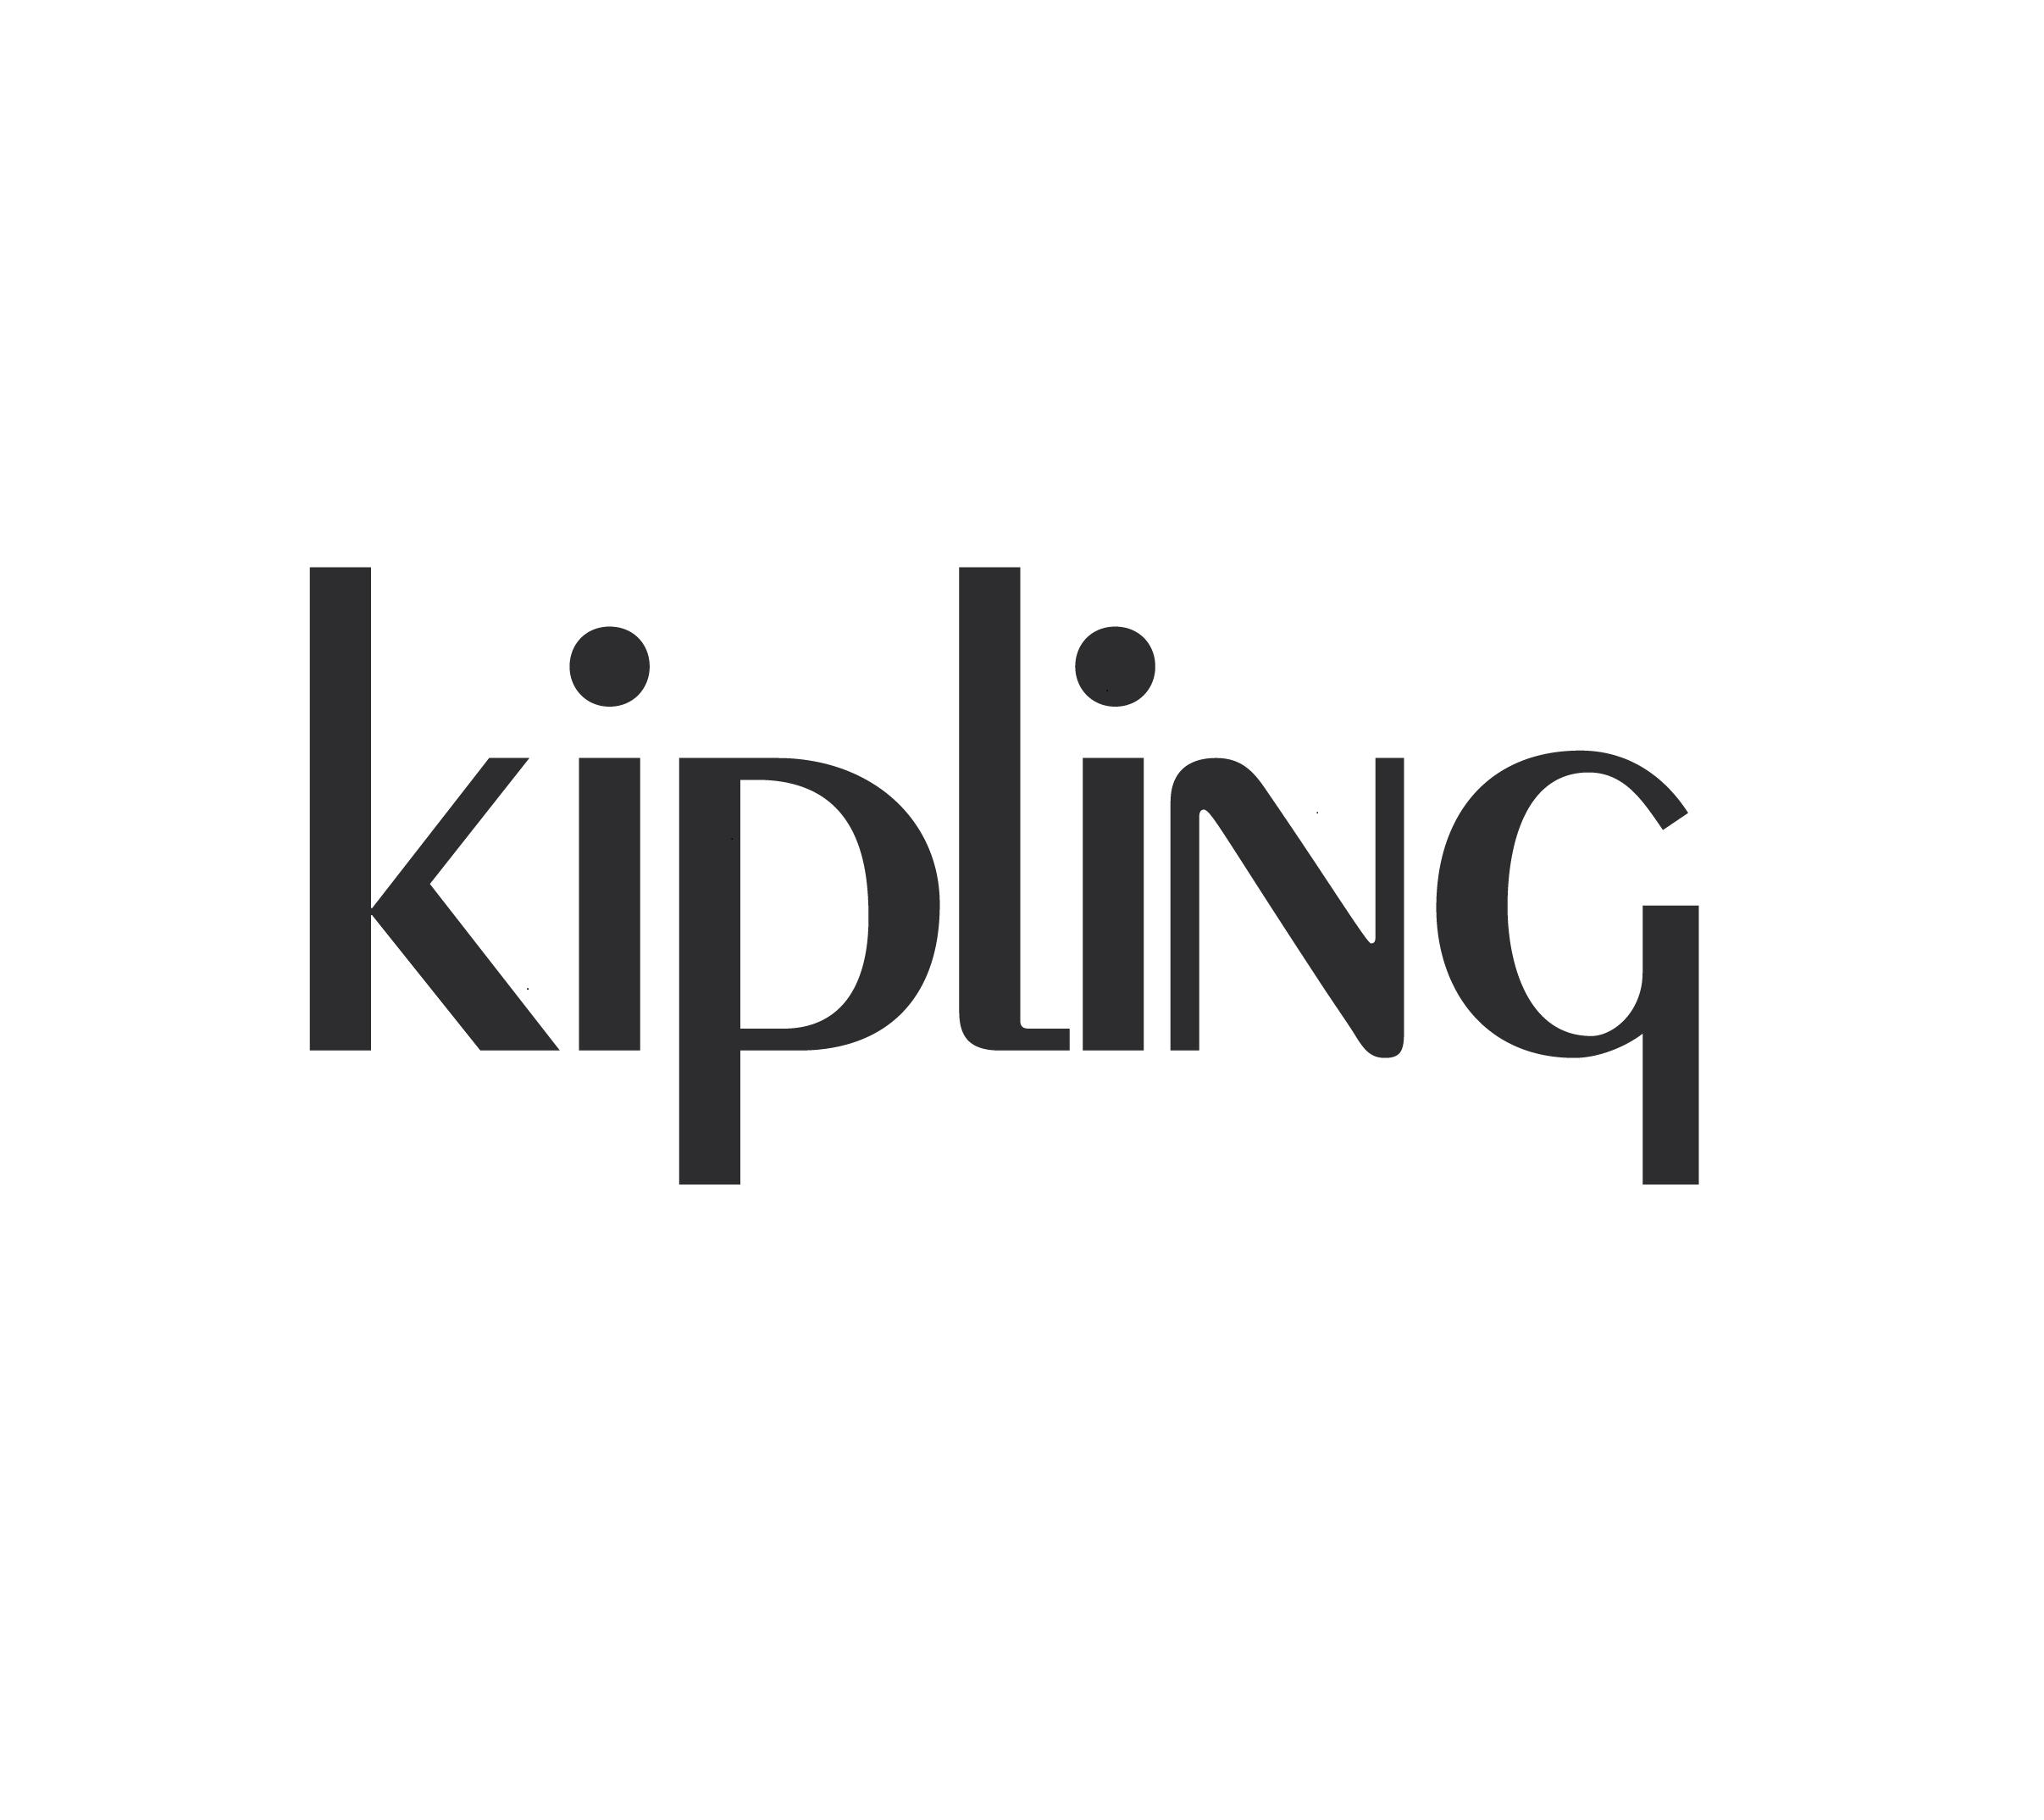 Kipling Rabattcode, Kipling Rabatt, Kipling Gutschein